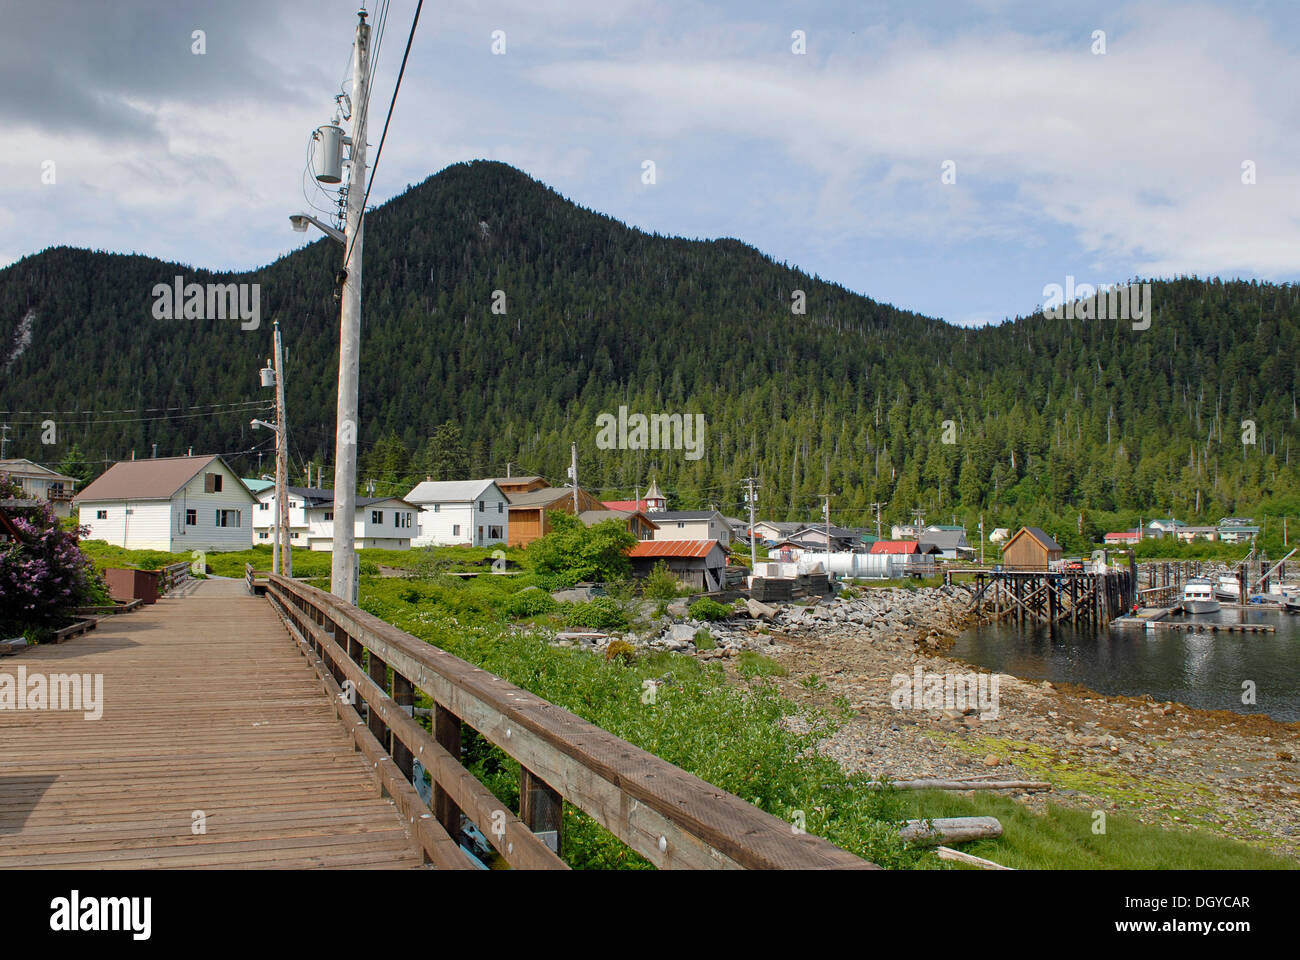 Village de la Première nation Gitga'ata, Hartley Bay, British Columbia, Canada, Amérique du Nord Banque D'Images